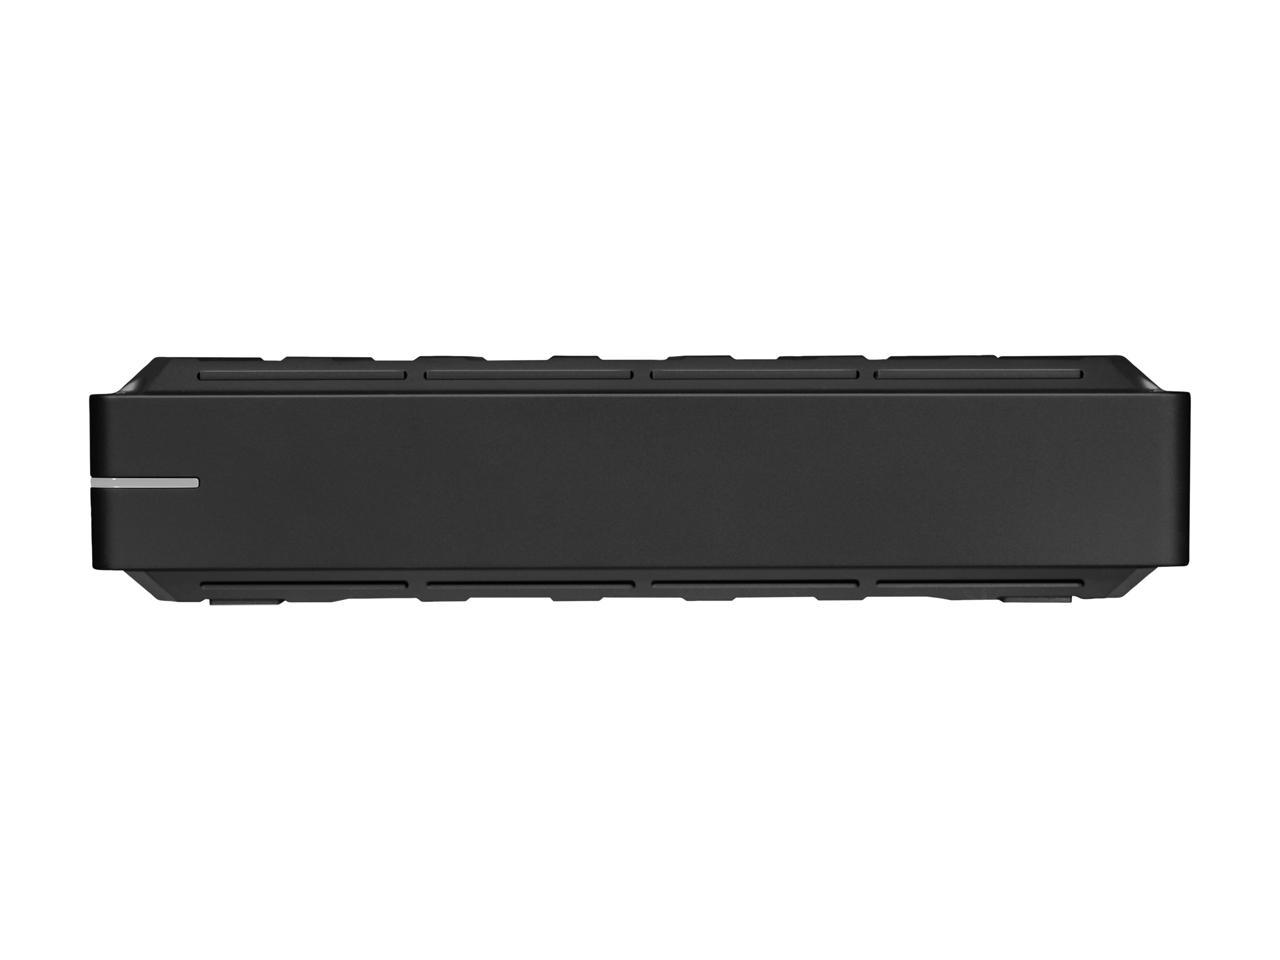 Wd Black 8Tb D10 Game Drive Portable External Hard Drive For Ps4/Xbox One/Pc/Mac Usb 3.2 (Wdba3P0080Hbk-Nesn)